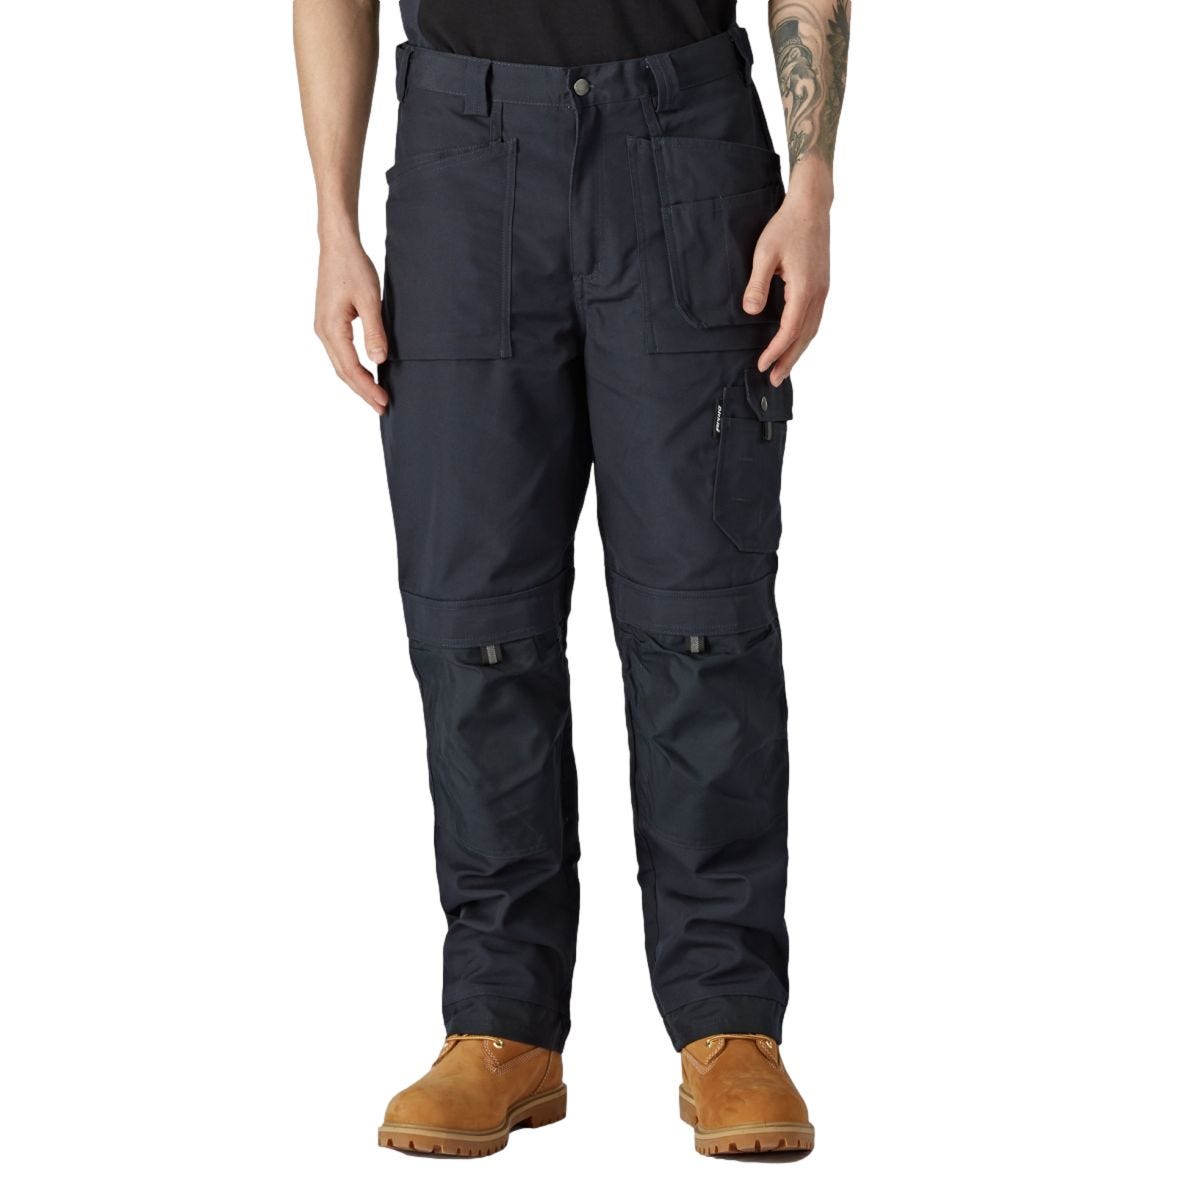 Pantalon Eisenhower multi-poches Bleu marine - Dickies - Taille 40 0